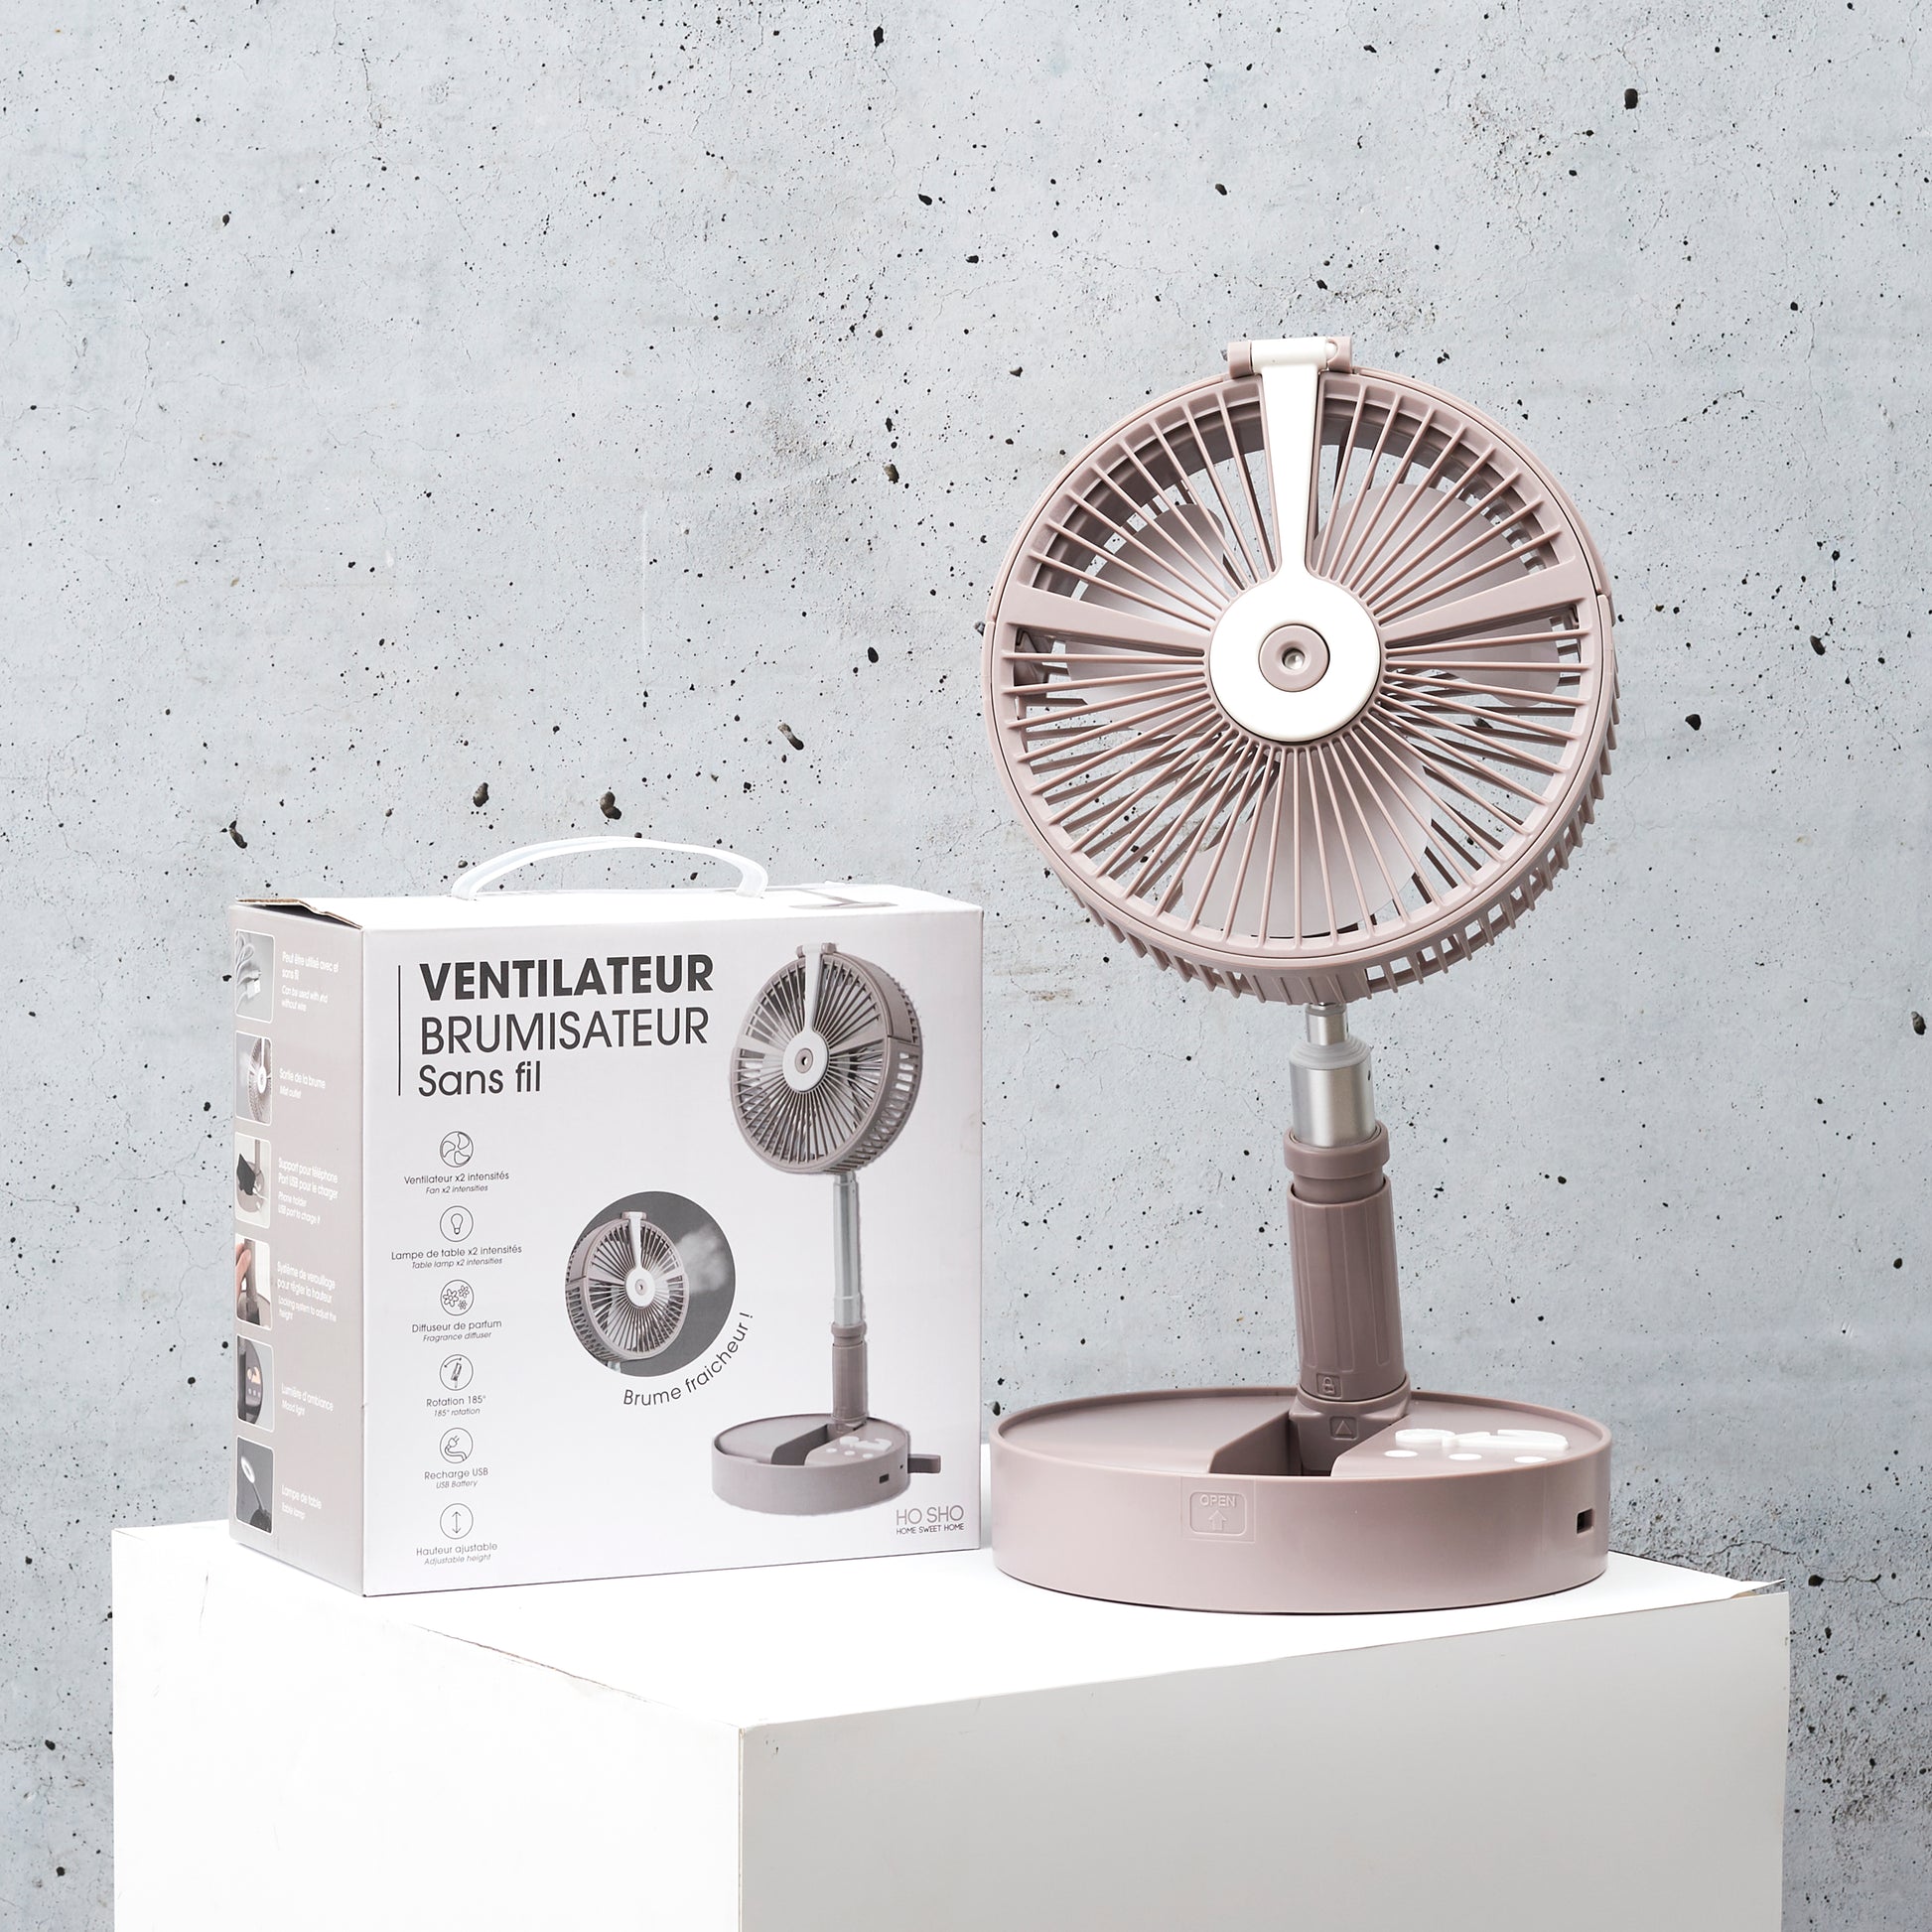 Ventilateur Brumisateur - Super Insolite